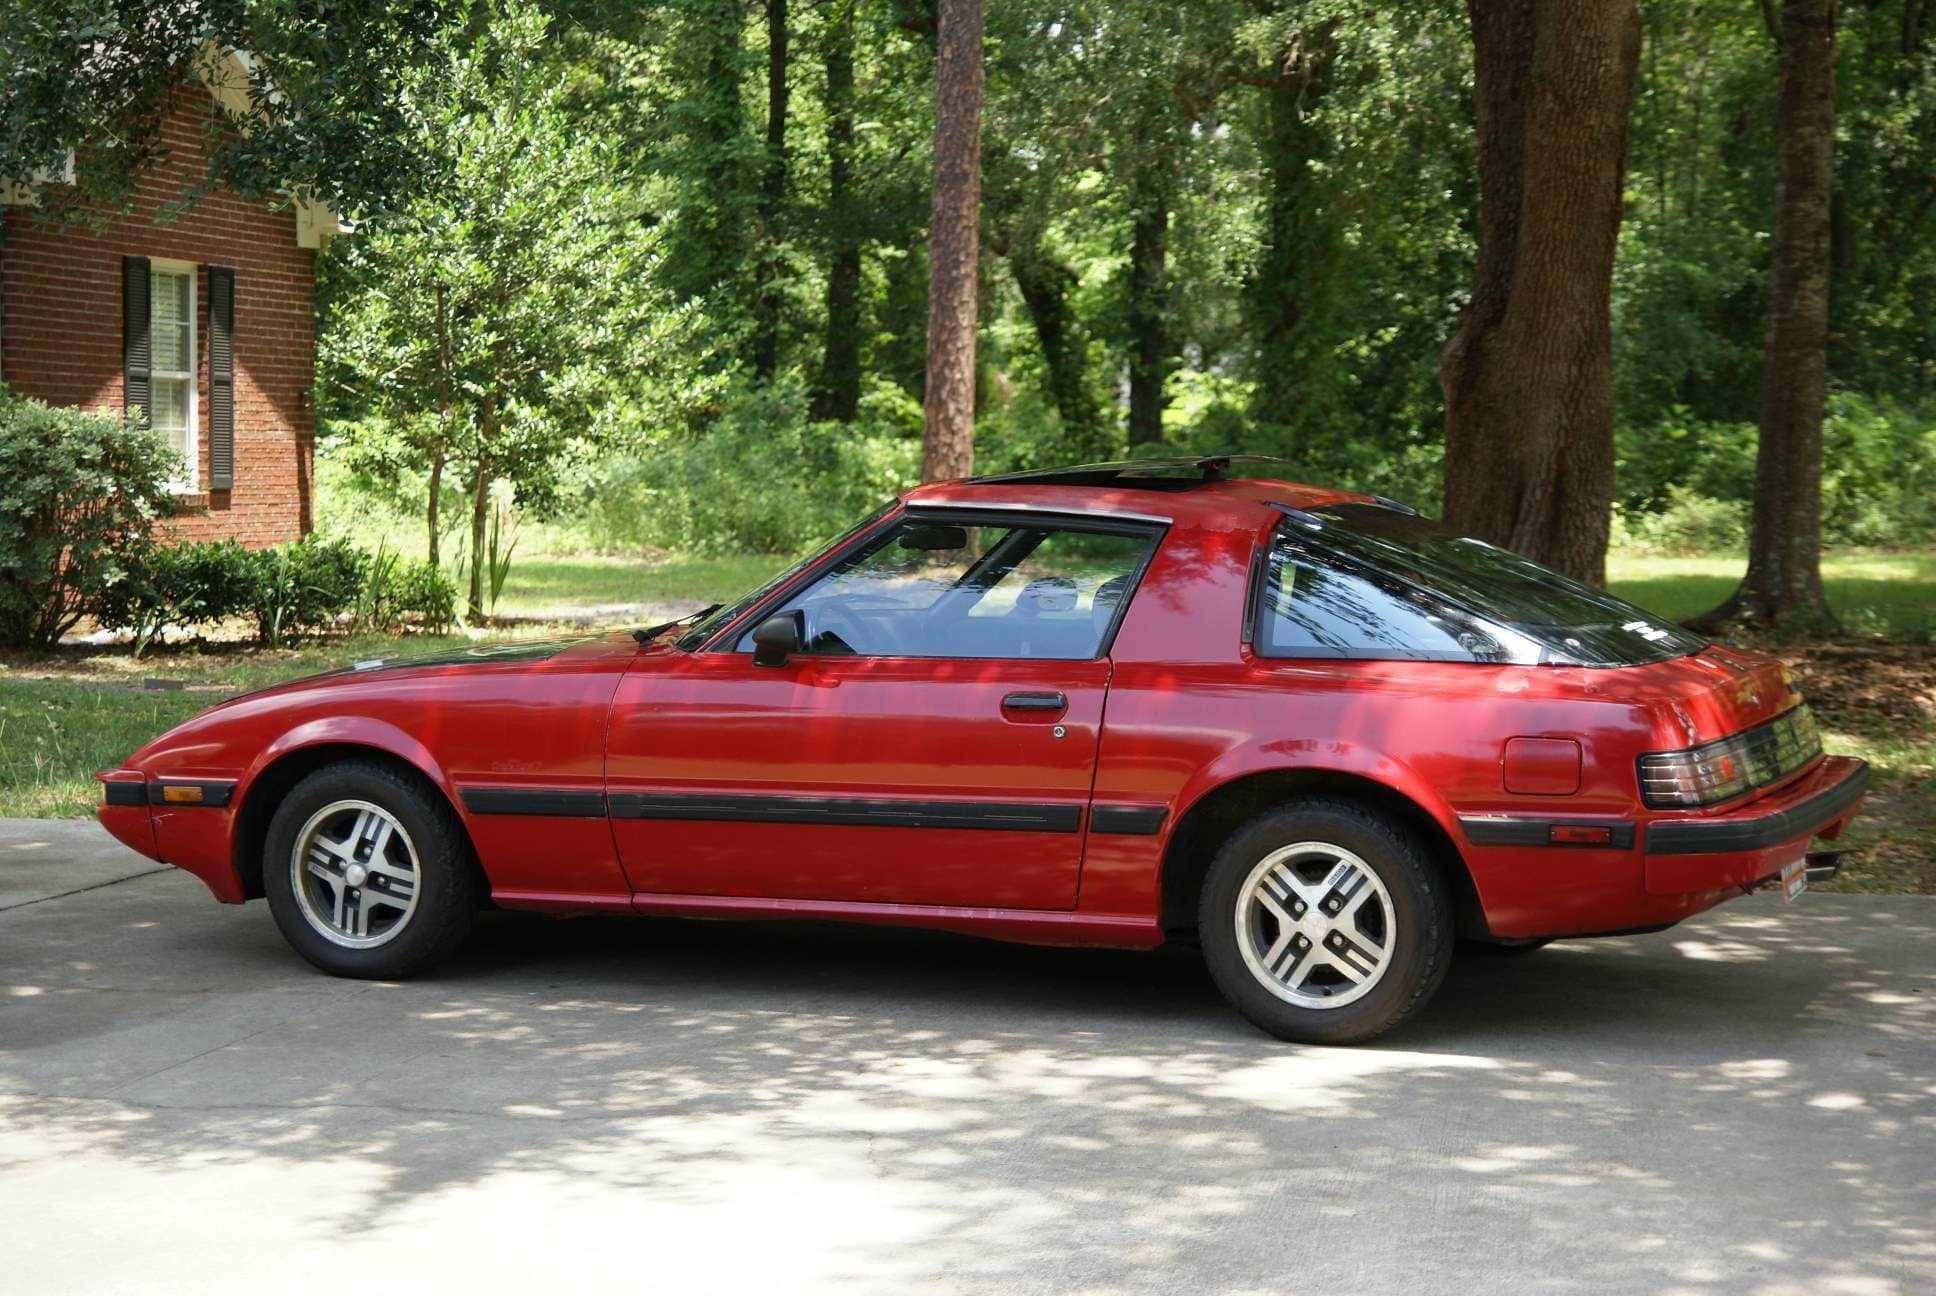 1983 Mazda RX-7 - '83 GS in South Georgia - Used - VIN 000000000000000 - Leesburg, GA 31763, United States